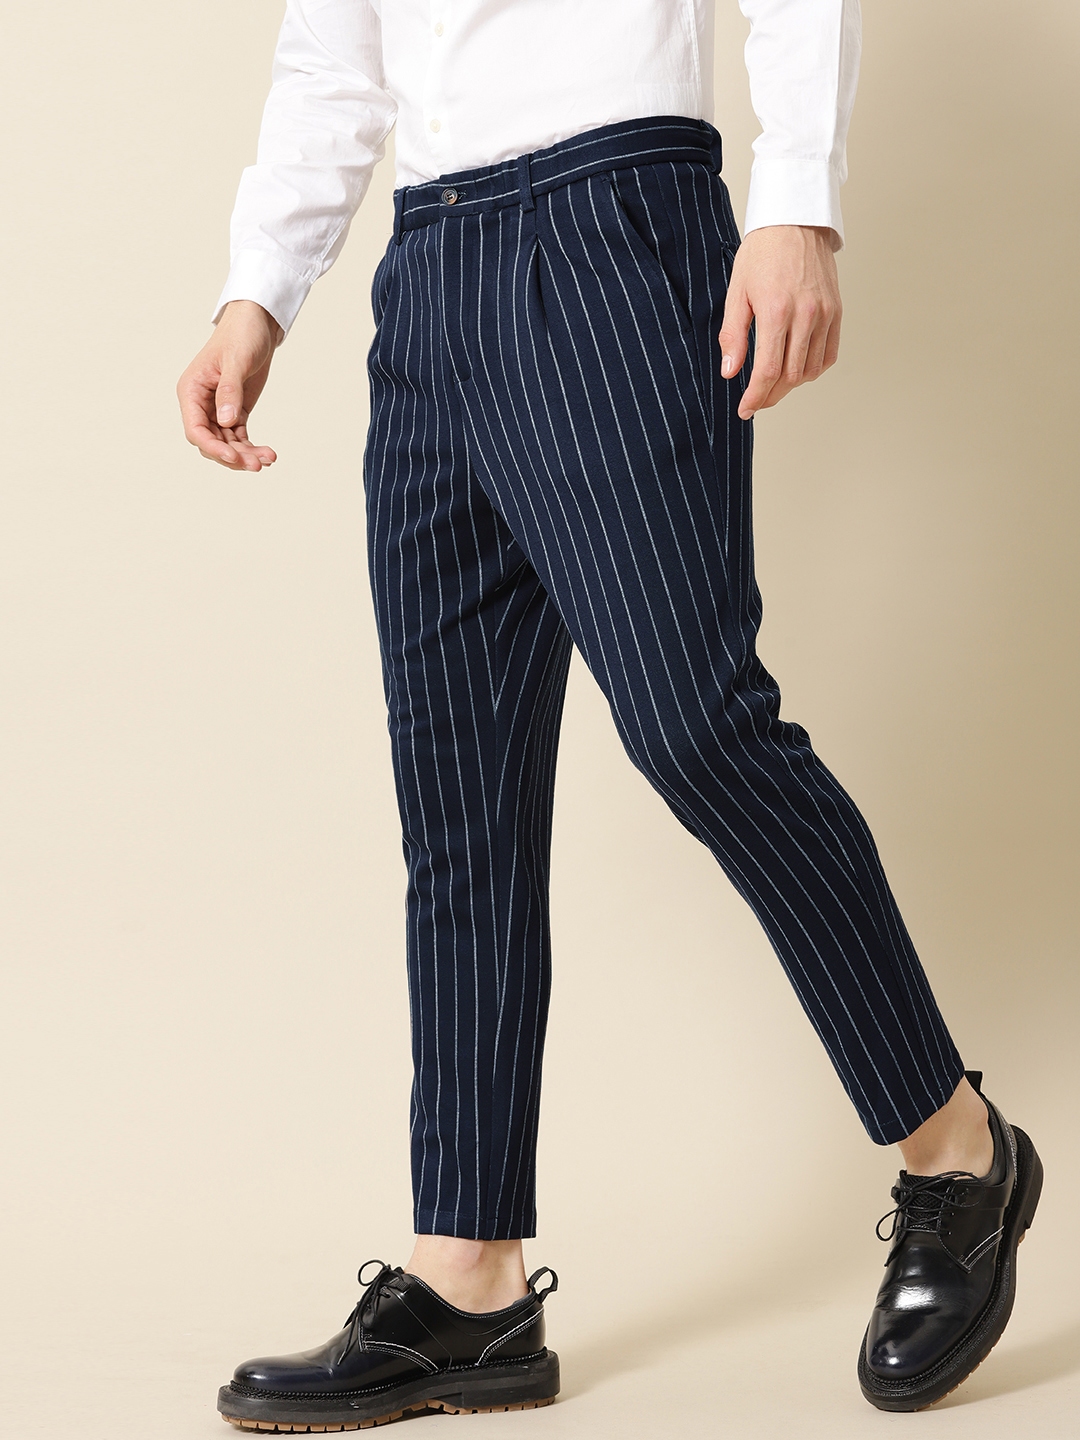 Summerhill Striped Trousers  NaturalNavy  Stripe pants outfit Striped  pants mens Pants outfit men